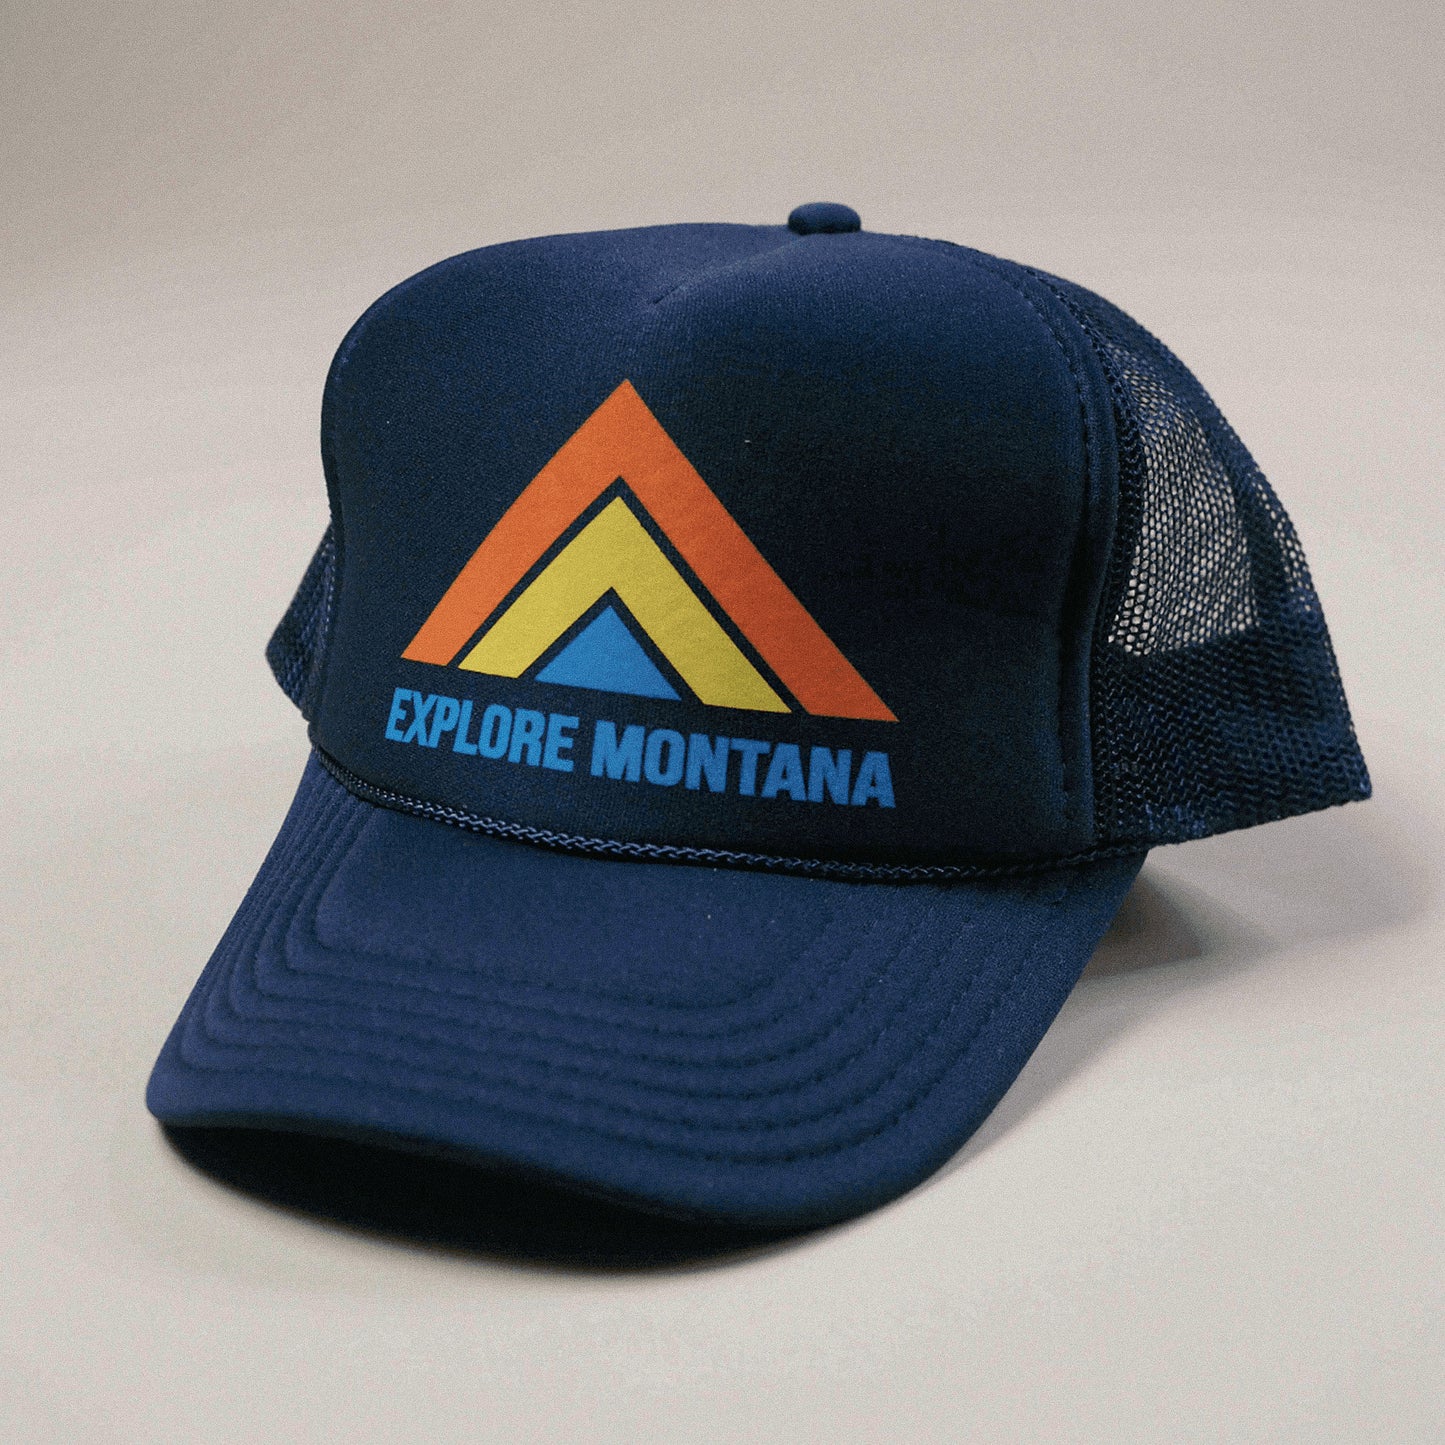 Explore Montana Trucker Hat